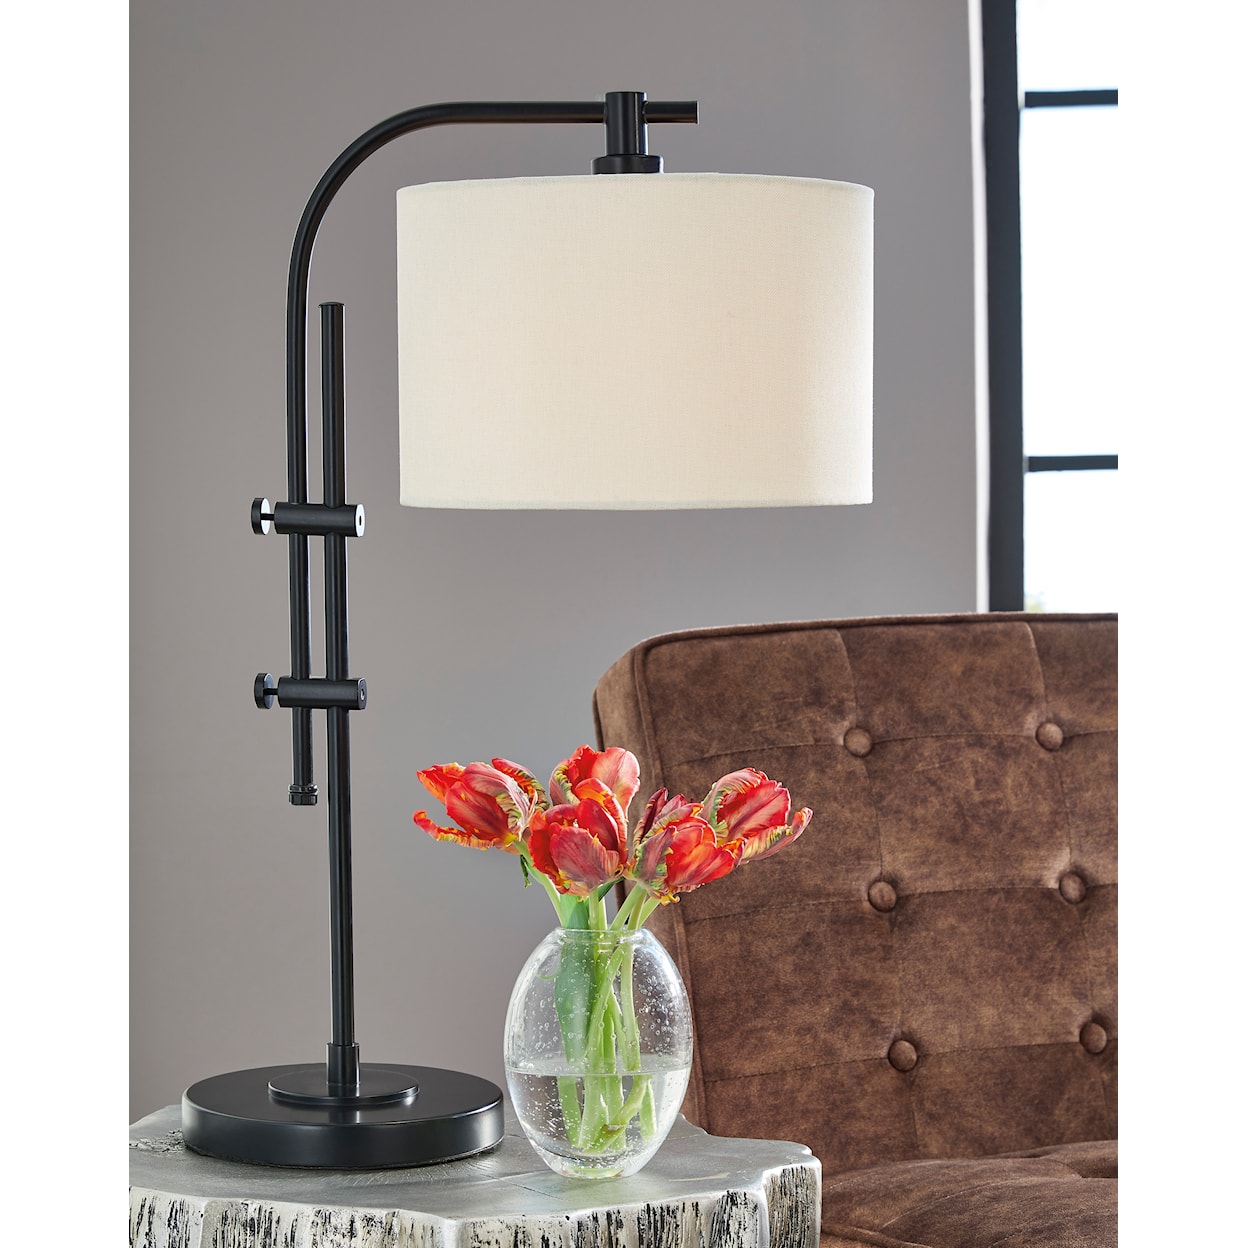 Ashley Furniture Signature Design Lamps - Casual Baronvale Accent Lamp